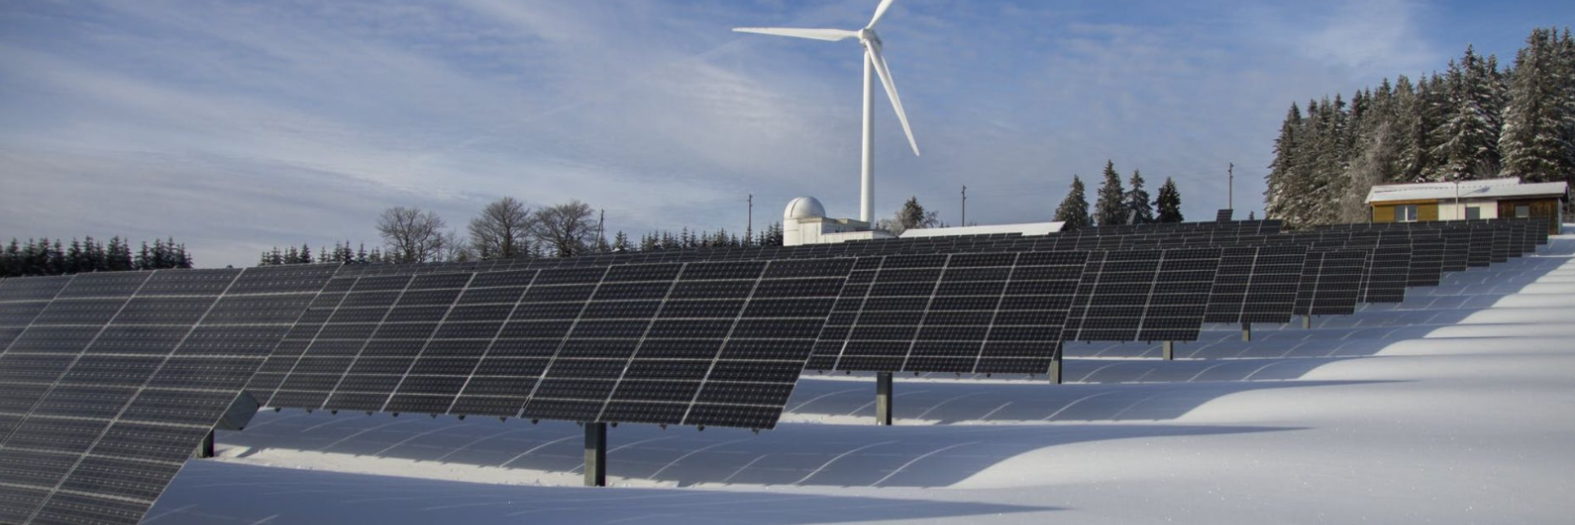 Solar farm with wind power in Winter